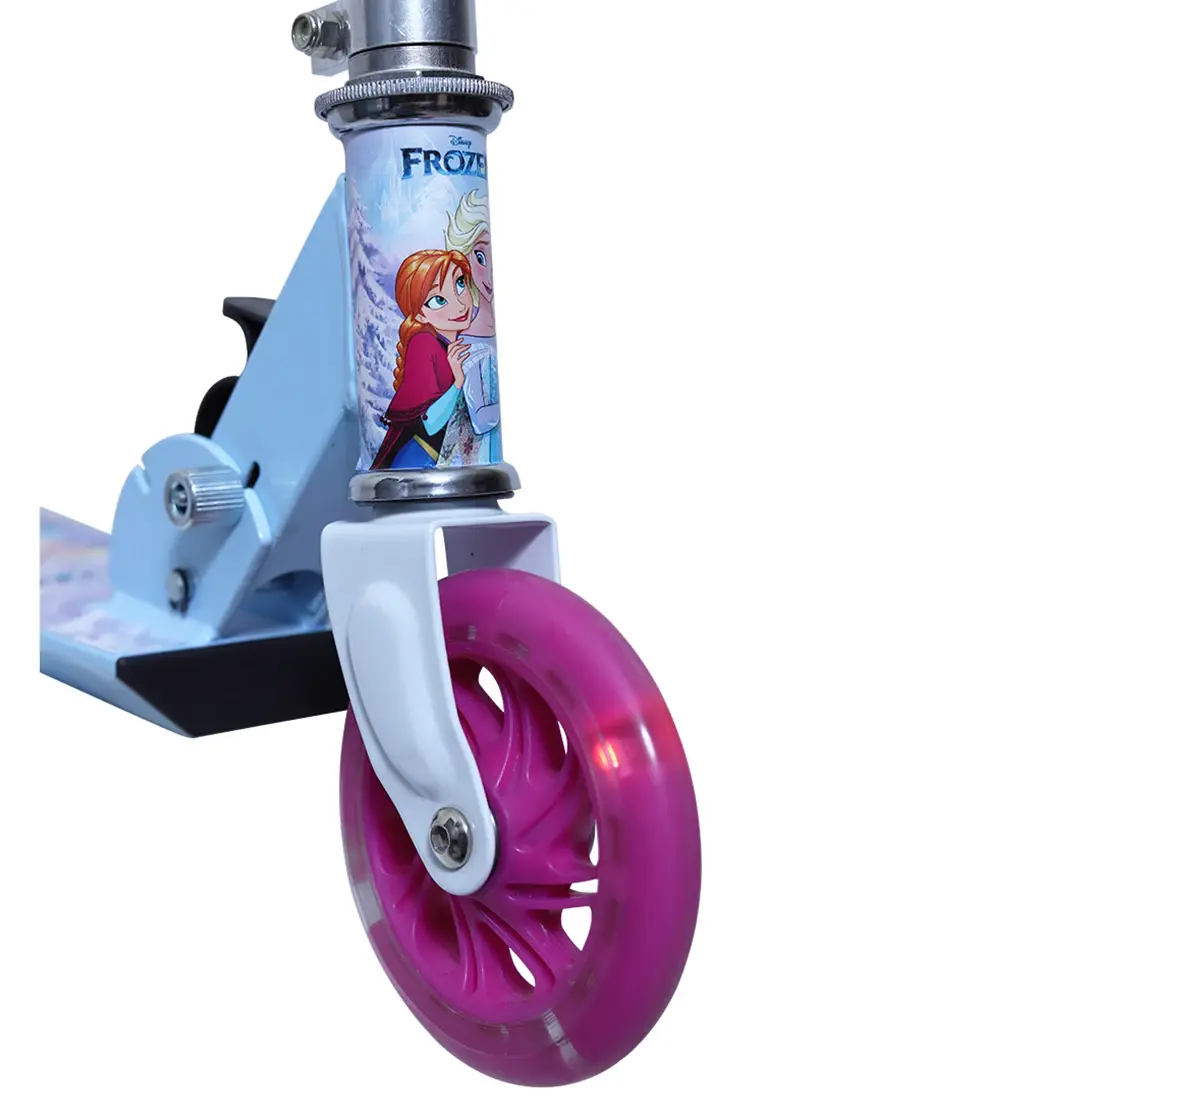 Frozen 2-Wheel Scooter for Kids age 4Y+, Blue